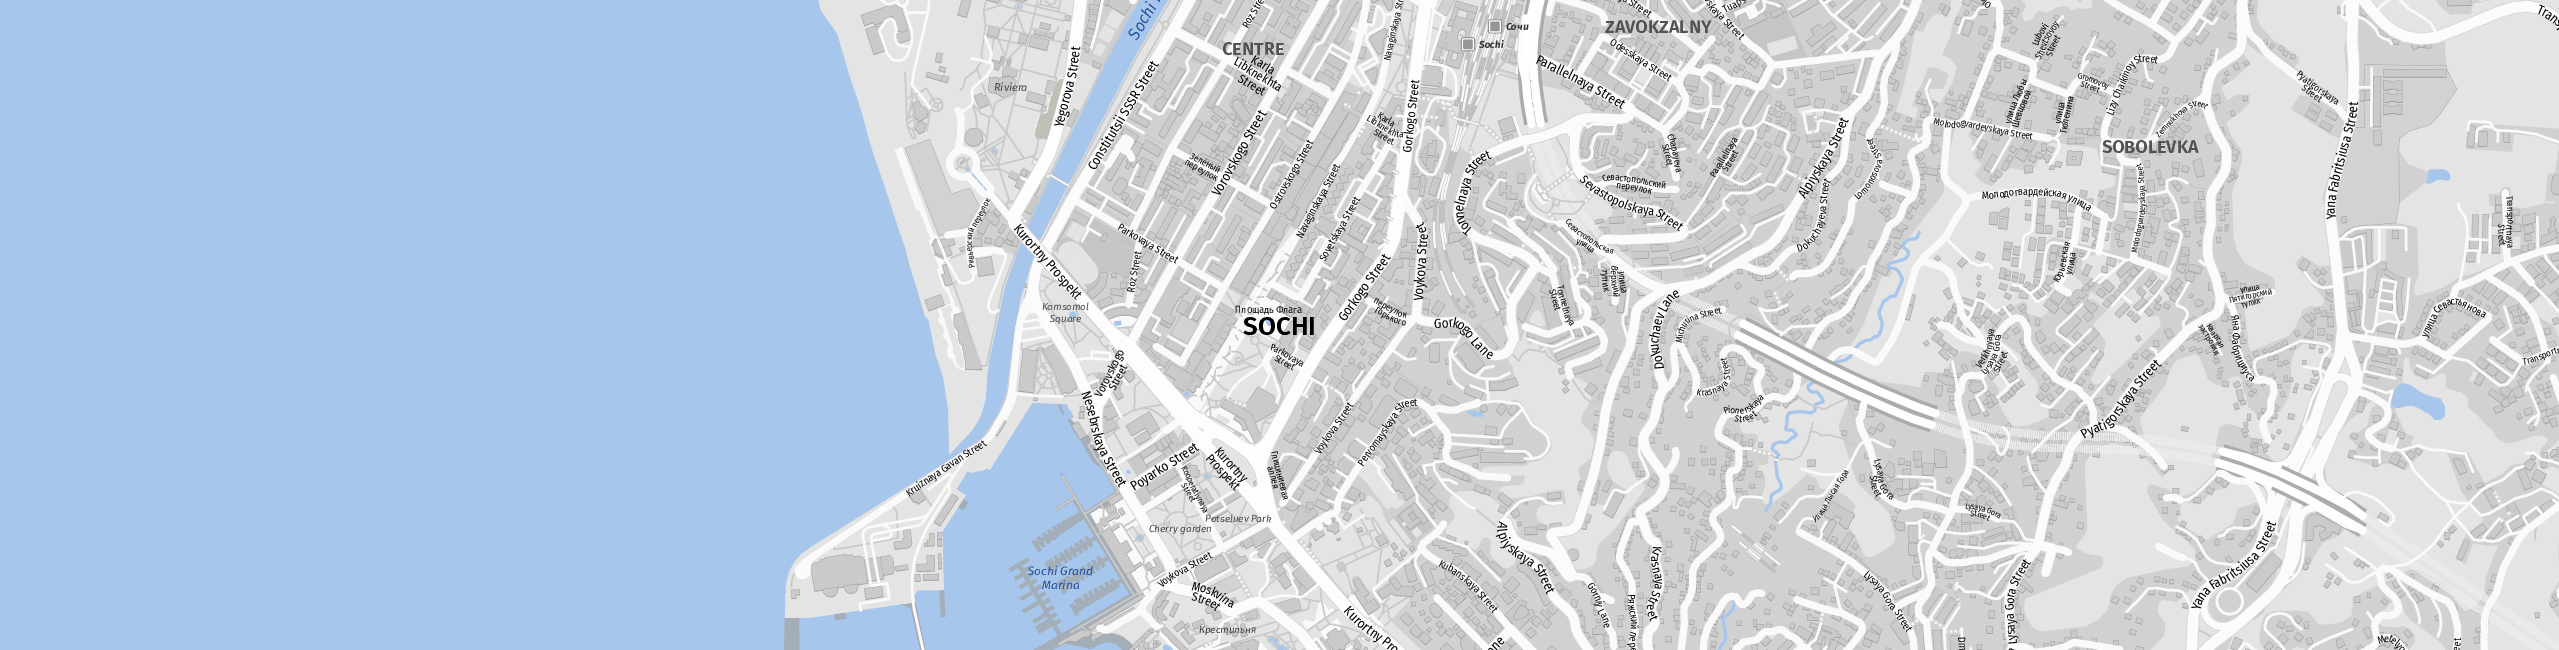 Stadtplan Sochi zum Downloaden.